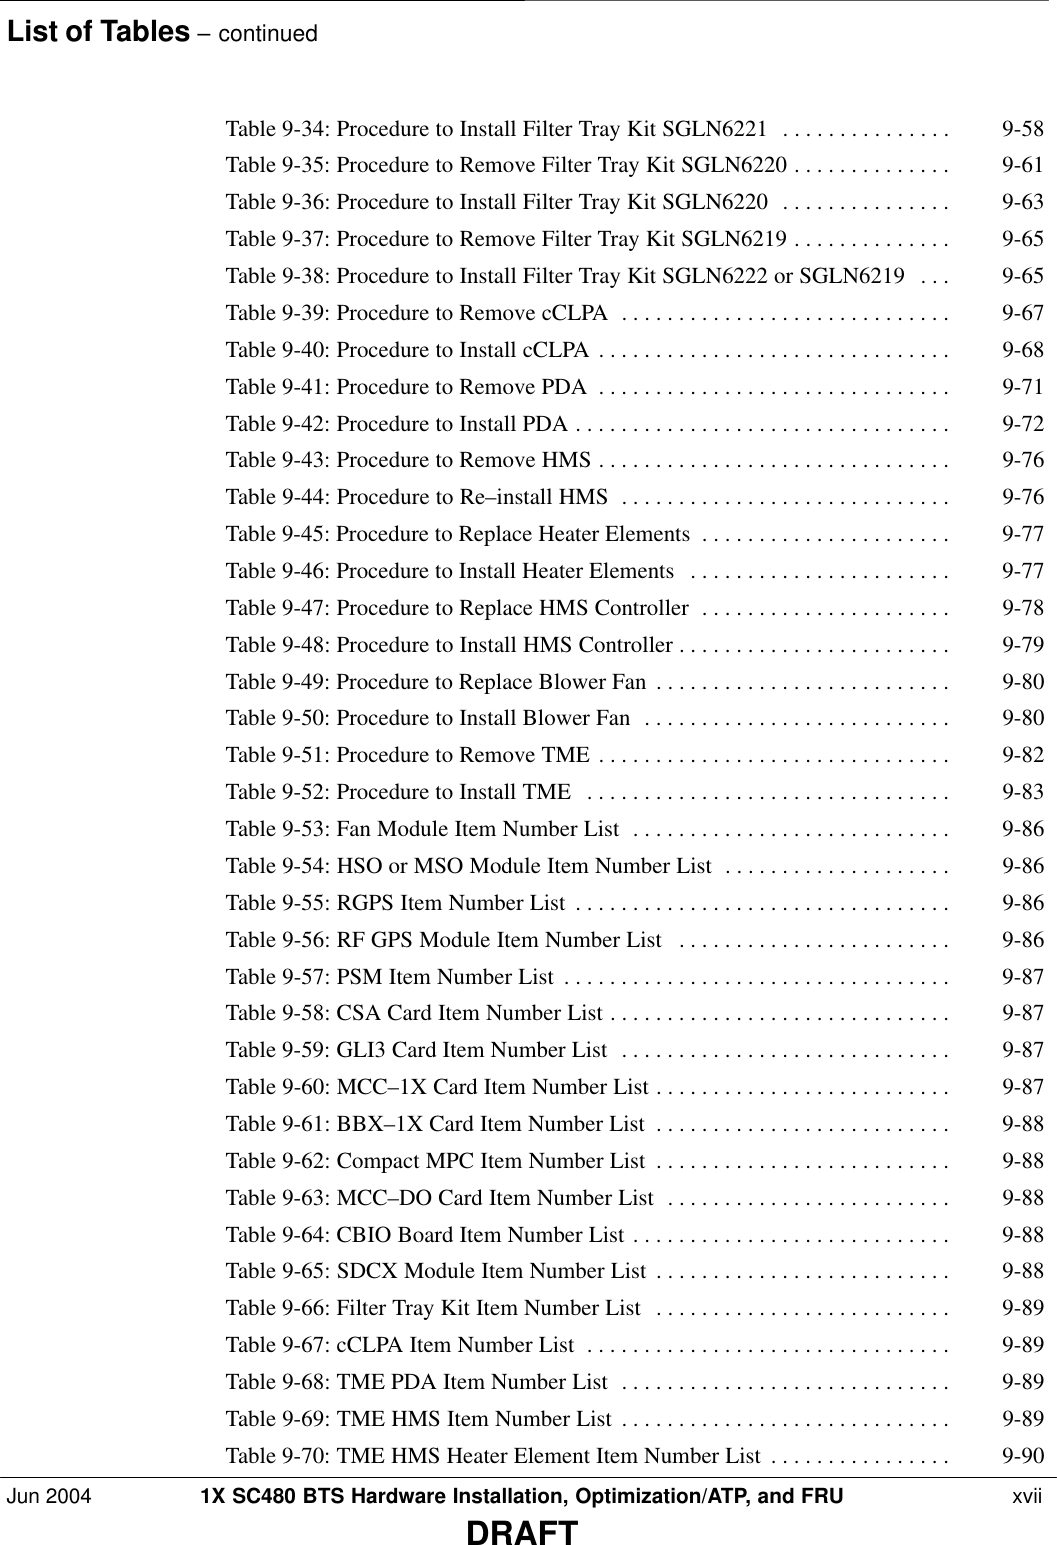 List of Tables – continuedJun 2004 1X SC480 BTS Hardware Installation, Optimization/ATP, and FRU  xviiDRAFTTable 9-34: Procedure to Install Filter Tray Kit SGLN6221 9-58 . . . . . . . . . . . . . . . Table 9-35: Procedure to Remove Filter Tray Kit SGLN6220 9-61 . . . . . . . . . . . . . . Table 9-36: Procedure to Install Filter Tray Kit SGLN6220 9-63 . . . . . . . . . . . . . . . Table 9-37: Procedure to Remove Filter Tray Kit SGLN6219 9-65 . . . . . . . . . . . . . . Table 9-38: Procedure to Install Filter Tray Kit SGLN6222 or SGLN6219 9-65 . . . Table 9-39: Procedure to Remove cCLPA 9-67 . . . . . . . . . . . . . . . . . . . . . . . . . . . . . Table 9-40: Procedure to Install cCLPA 9-68 . . . . . . . . . . . . . . . . . . . . . . . . . . . . . . . Table 9-41: Procedure to Remove PDA 9-71 . . . . . . . . . . . . . . . . . . . . . . . . . . . . . . . Table 9-42: Procedure to Install PDA 9-72 . . . . . . . . . . . . . . . . . . . . . . . . . . . . . . . . . Table 9-43: Procedure to Remove HMS 9-76 . . . . . . . . . . . . . . . . . . . . . . . . . . . . . . . Table 9-44: Procedure to Re–install HMS 9-76 . . . . . . . . . . . . . . . . . . . . . . . . . . . . . Table 9-45: Procedure to Replace Heater Elements 9-77 . . . . . . . . . . . . . . . . . . . . . . Table 9-46: Procedure to Install Heater Elements 9-77 . . . . . . . . . . . . . . . . . . . . . . . Table 9-47: Procedure to Replace HMS Controller 9-78 . . . . . . . . . . . . . . . . . . . . . . Table 9-48: Procedure to Install HMS Controller 9-79 . . . . . . . . . . . . . . . . . . . . . . . . Table 9-49: Procedure to Replace Blower Fan 9-80 . . . . . . . . . . . . . . . . . . . . . . . . . . Table 9-50: Procedure to Install Blower Fan 9-80 . . . . . . . . . . . . . . . . . . . . . . . . . . . Table 9-51: Procedure to Remove TME 9-82 . . . . . . . . . . . . . . . . . . . . . . . . . . . . . . . Table 9-52: Procedure to Install TME 9-83 . . . . . . . . . . . . . . . . . . . . . . . . . . . . . . . . Table 9-53: Fan Module Item Number List 9-86 . . . . . . . . . . . . . . . . . . . . . . . . . . . . Table 9-54: HSO or MSO Module Item Number List 9-86 . . . . . . . . . . . . . . . . . . . . Table 9-55: RGPS Item Number List 9-86 . . . . . . . . . . . . . . . . . . . . . . . . . . . . . . . . . Table 9-56: RF GPS Module Item Number List 9-86 . . . . . . . . . . . . . . . . . . . . . . . . Table 9-57: PSM Item Number List 9-87 . . . . . . . . . . . . . . . . . . . . . . . . . . . . . . . . . . Table 9-58: CSA Card Item Number List 9-87 . . . . . . . . . . . . . . . . . . . . . . . . . . . . . . Table 9-59: GLI3 Card Item Number List 9-87 . . . . . . . . . . . . . . . . . . . . . . . . . . . . . Table 9-60: MCC–1X Card Item Number List 9-87 . . . . . . . . . . . . . . . . . . . . . . . . . . Table 9-61: BBX–1X Card Item Number List 9-88 . . . . . . . . . . . . . . . . . . . . . . . . . . Table 9-62: Compact MPC Item Number List 9-88 . . . . . . . . . . . . . . . . . . . . . . . . . . Table 9-63: MCC–DO Card Item Number List 9-88 . . . . . . . . . . . . . . . . . . . . . . . . . Table 9-64: CBIO Board Item Number List 9-88 . . . . . . . . . . . . . . . . . . . . . . . . . . . . Table 9-65: SDCX Module Item Number List 9-88 . . . . . . . . . . . . . . . . . . . . . . . . . . Table 9-66: Filter Tray Kit Item Number List 9-89 . . . . . . . . . . . . . . . . . . . . . . . . . . Table 9-67: cCLPA Item Number List 9-89 . . . . . . . . . . . . . . . . . . . . . . . . . . . . . . . . Table 9-68: TME PDA Item Number List 9-89 . . . . . . . . . . . . . . . . . . . . . . . . . . . . . Table 9-69: TME HMS Item Number List 9-89 . . . . . . . . . . . . . . . . . . . . . . . . . . . . . Table 9-70: TME HMS Heater Element Item Number List 9-90 . . . . . . . . . . . . . . . . 